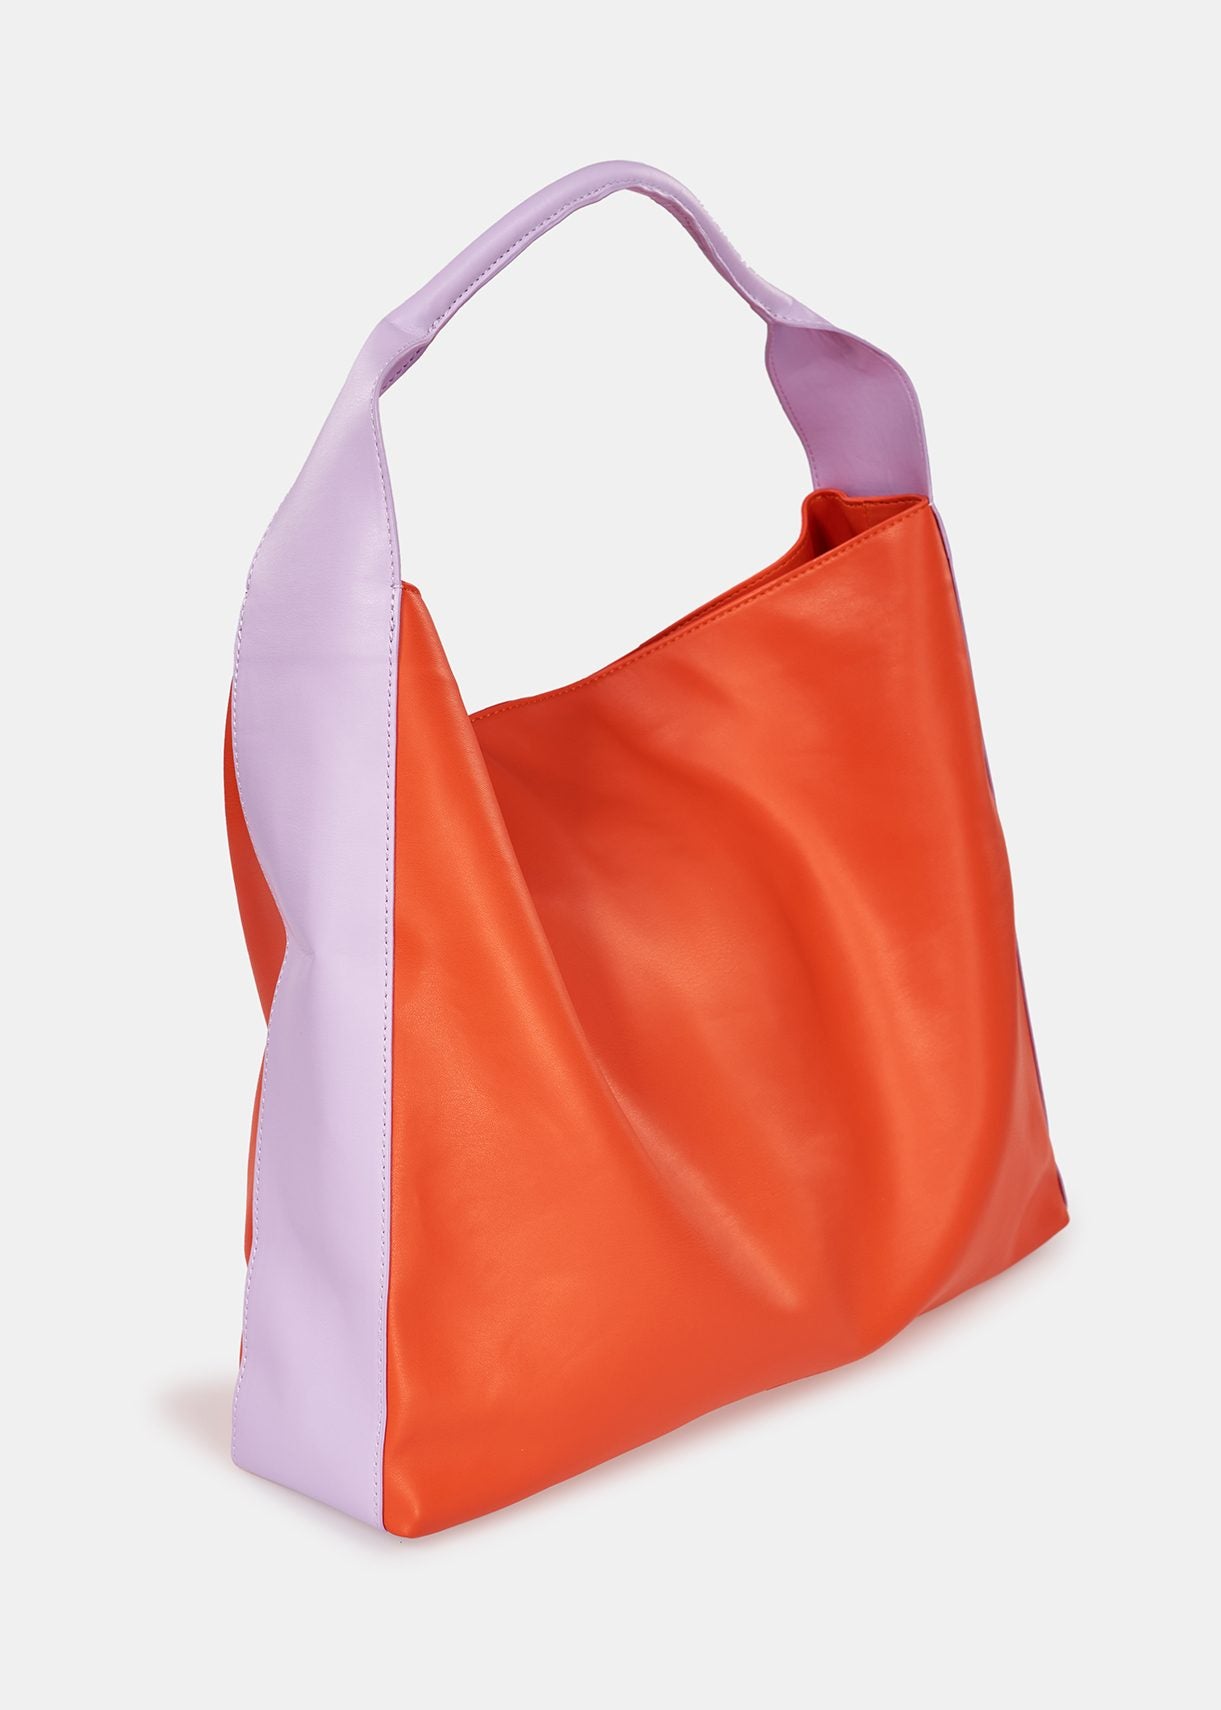 Essentiel Antwerp - Dempsey Large Hobo Bag -Orange and Lilac